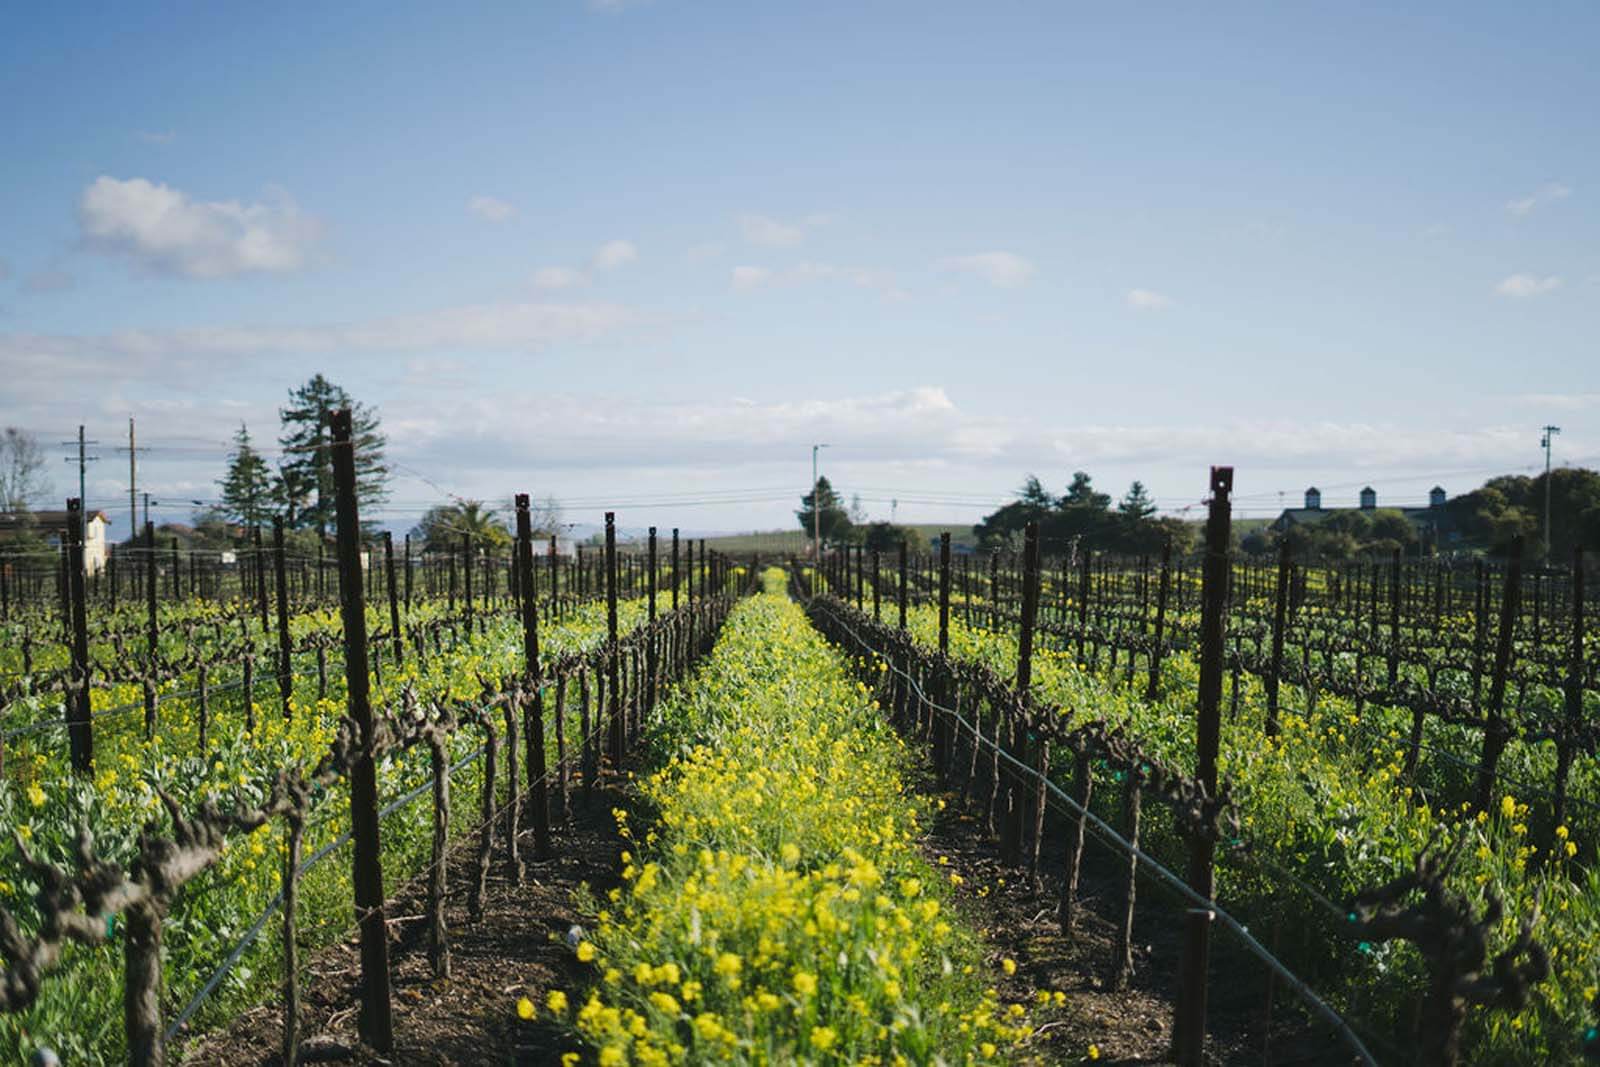 view down a row of yellow flowers between vineyard vines